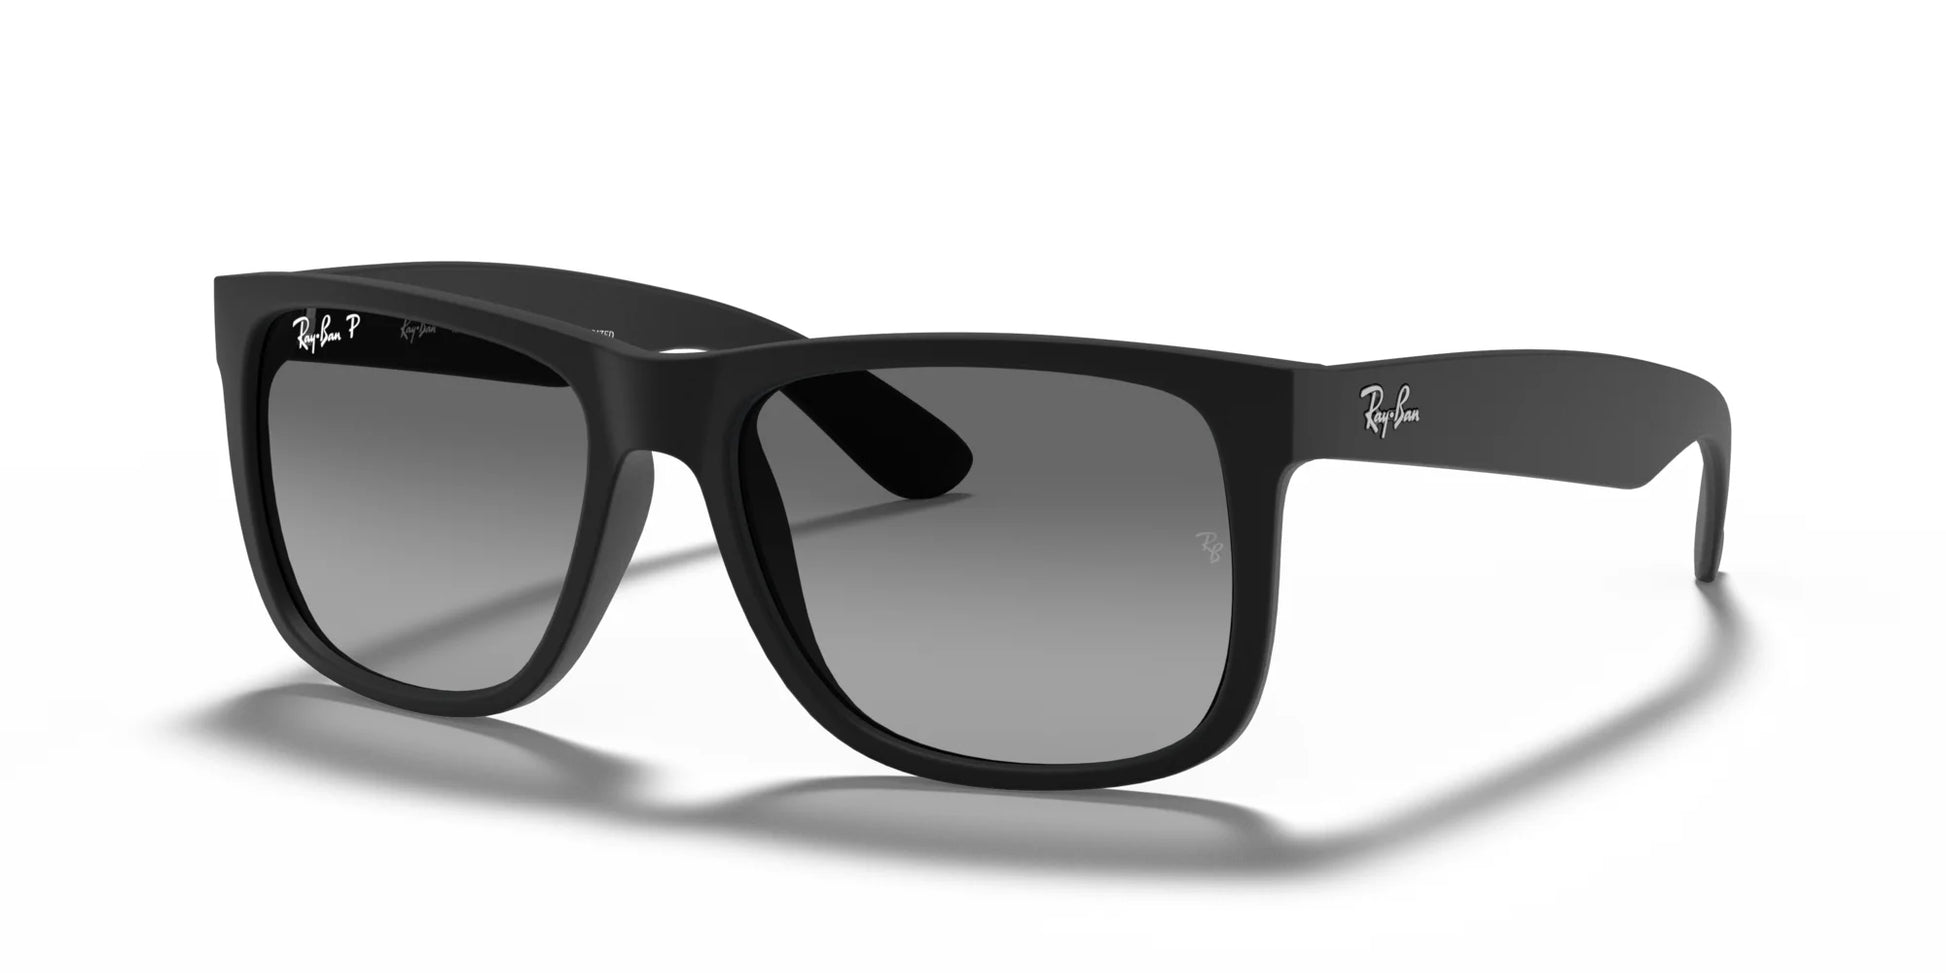 Ray-Ban JUSTIN RB4165 Sunglasses Black / Light Grey